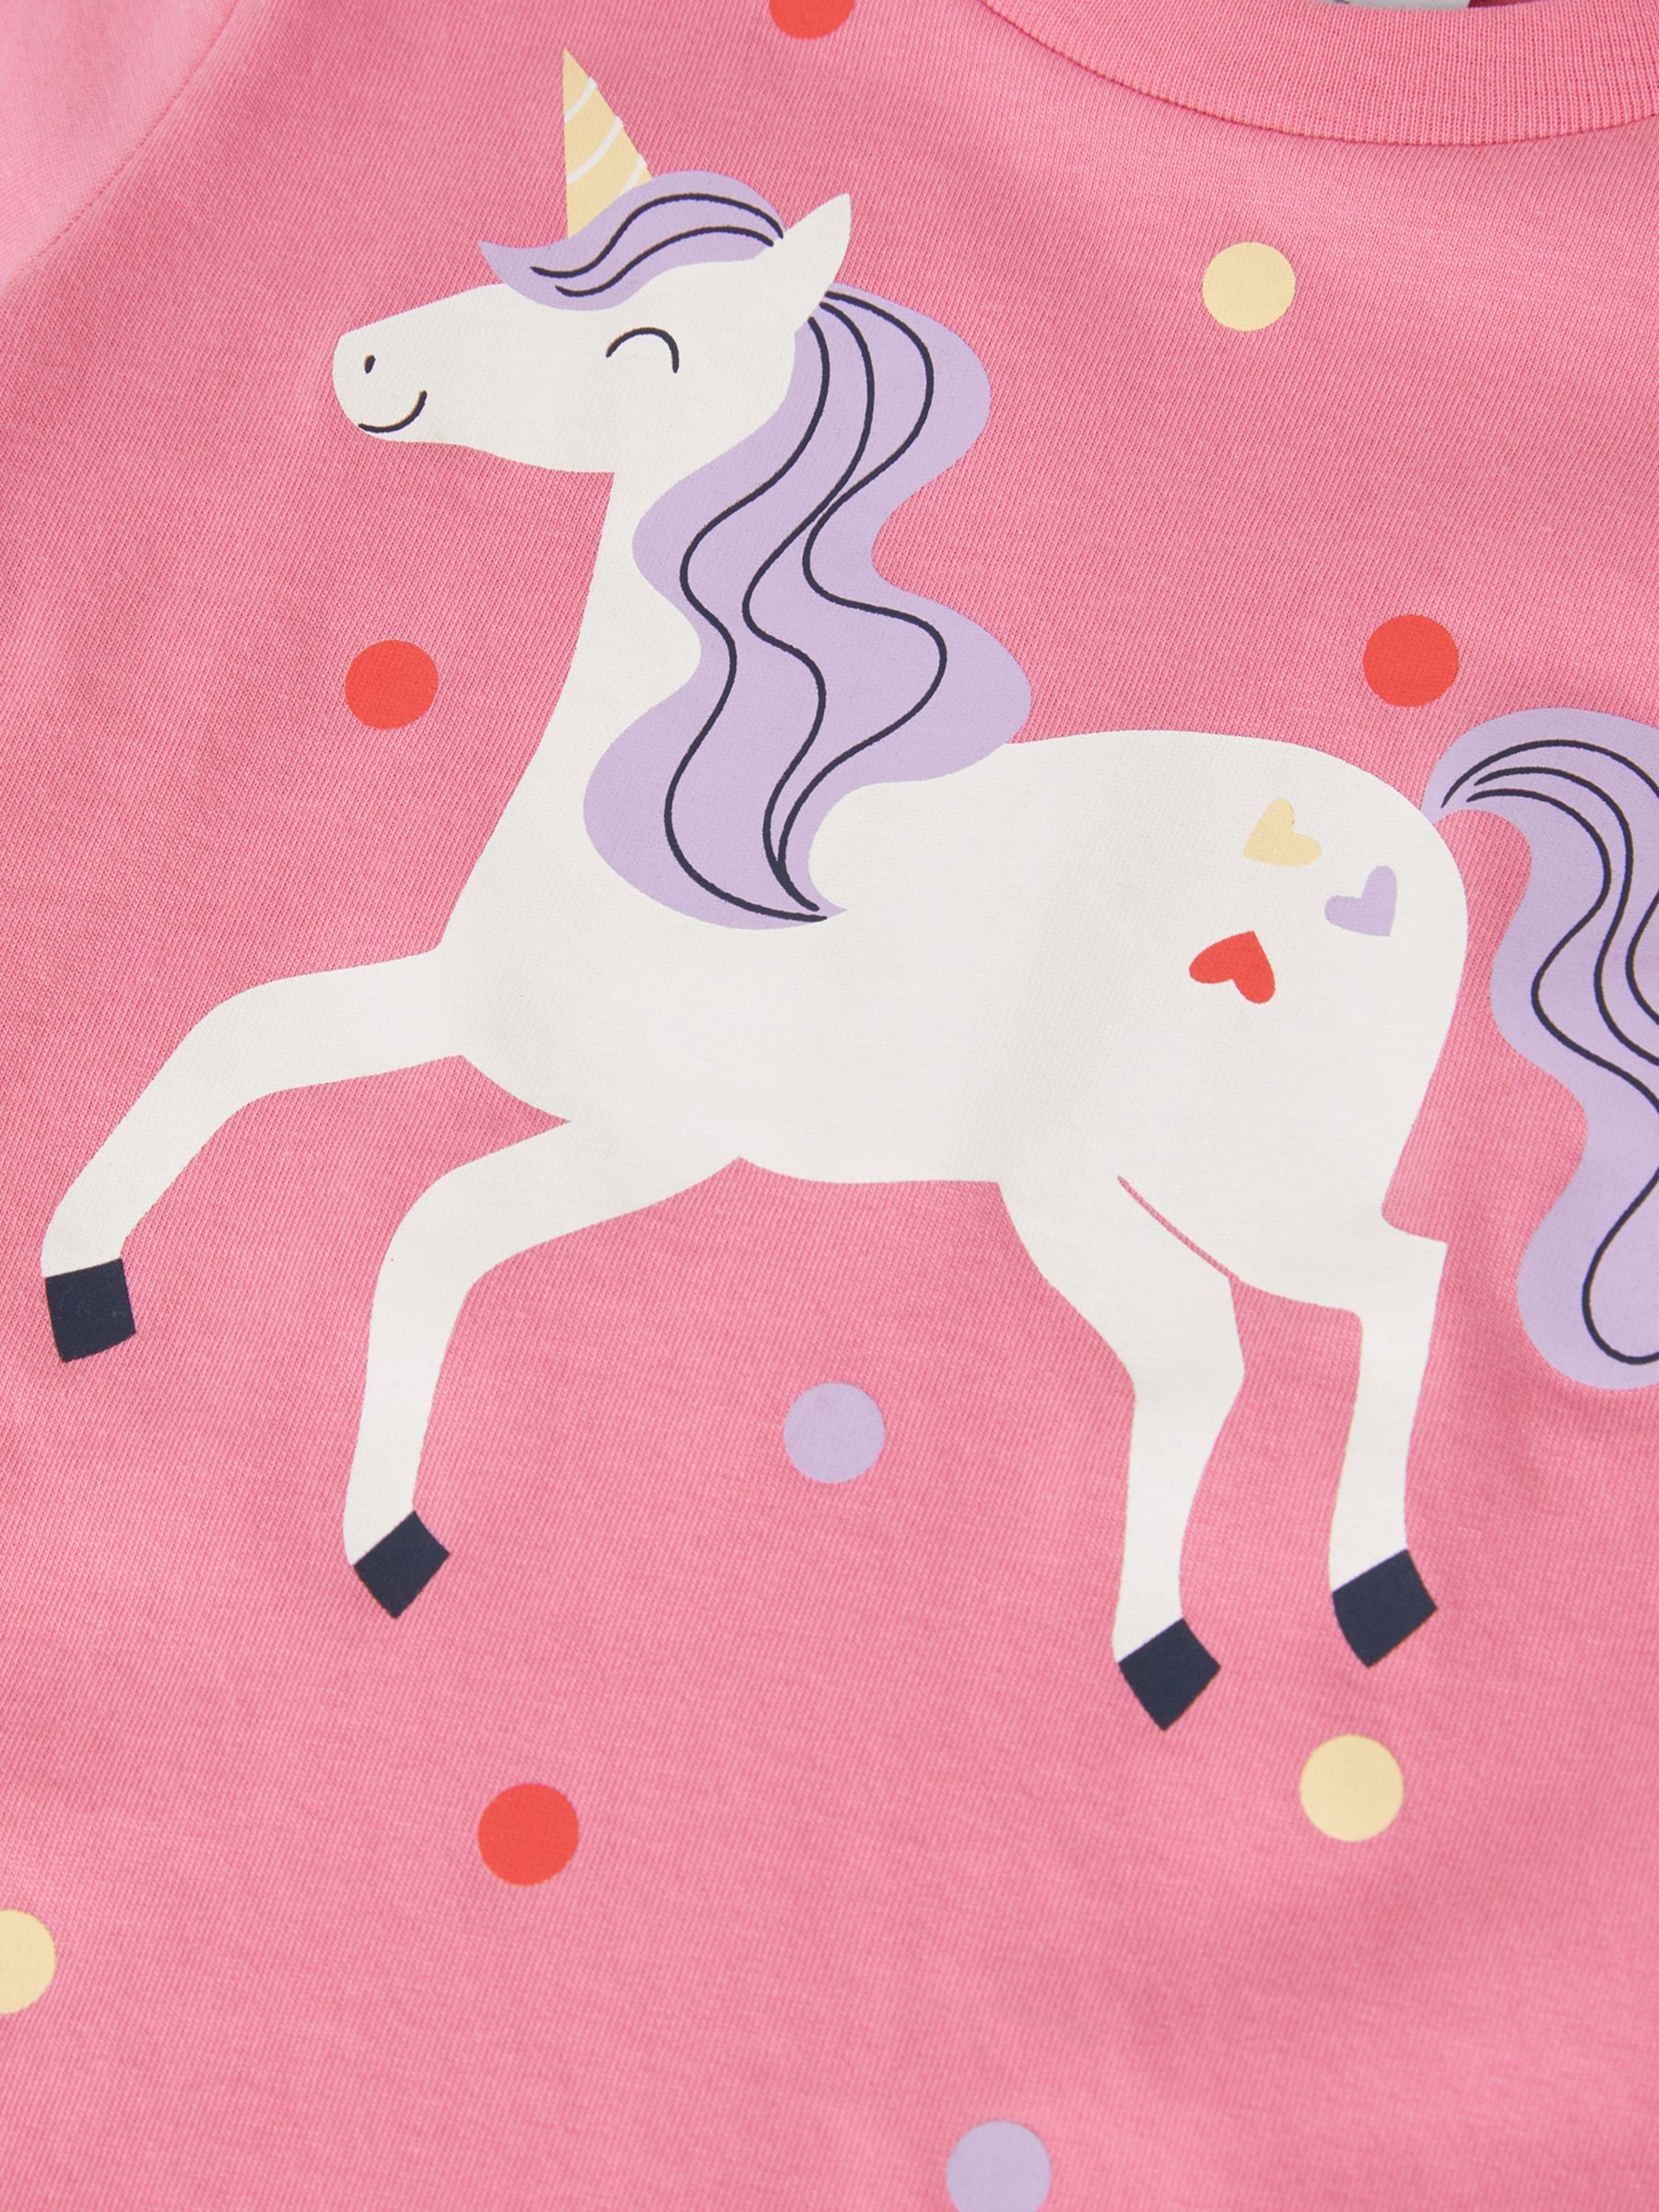 Polarn O. Pyret Kids' GOTS Organic Cotton Unicorn T-Shirt, Pink, 12-18 months